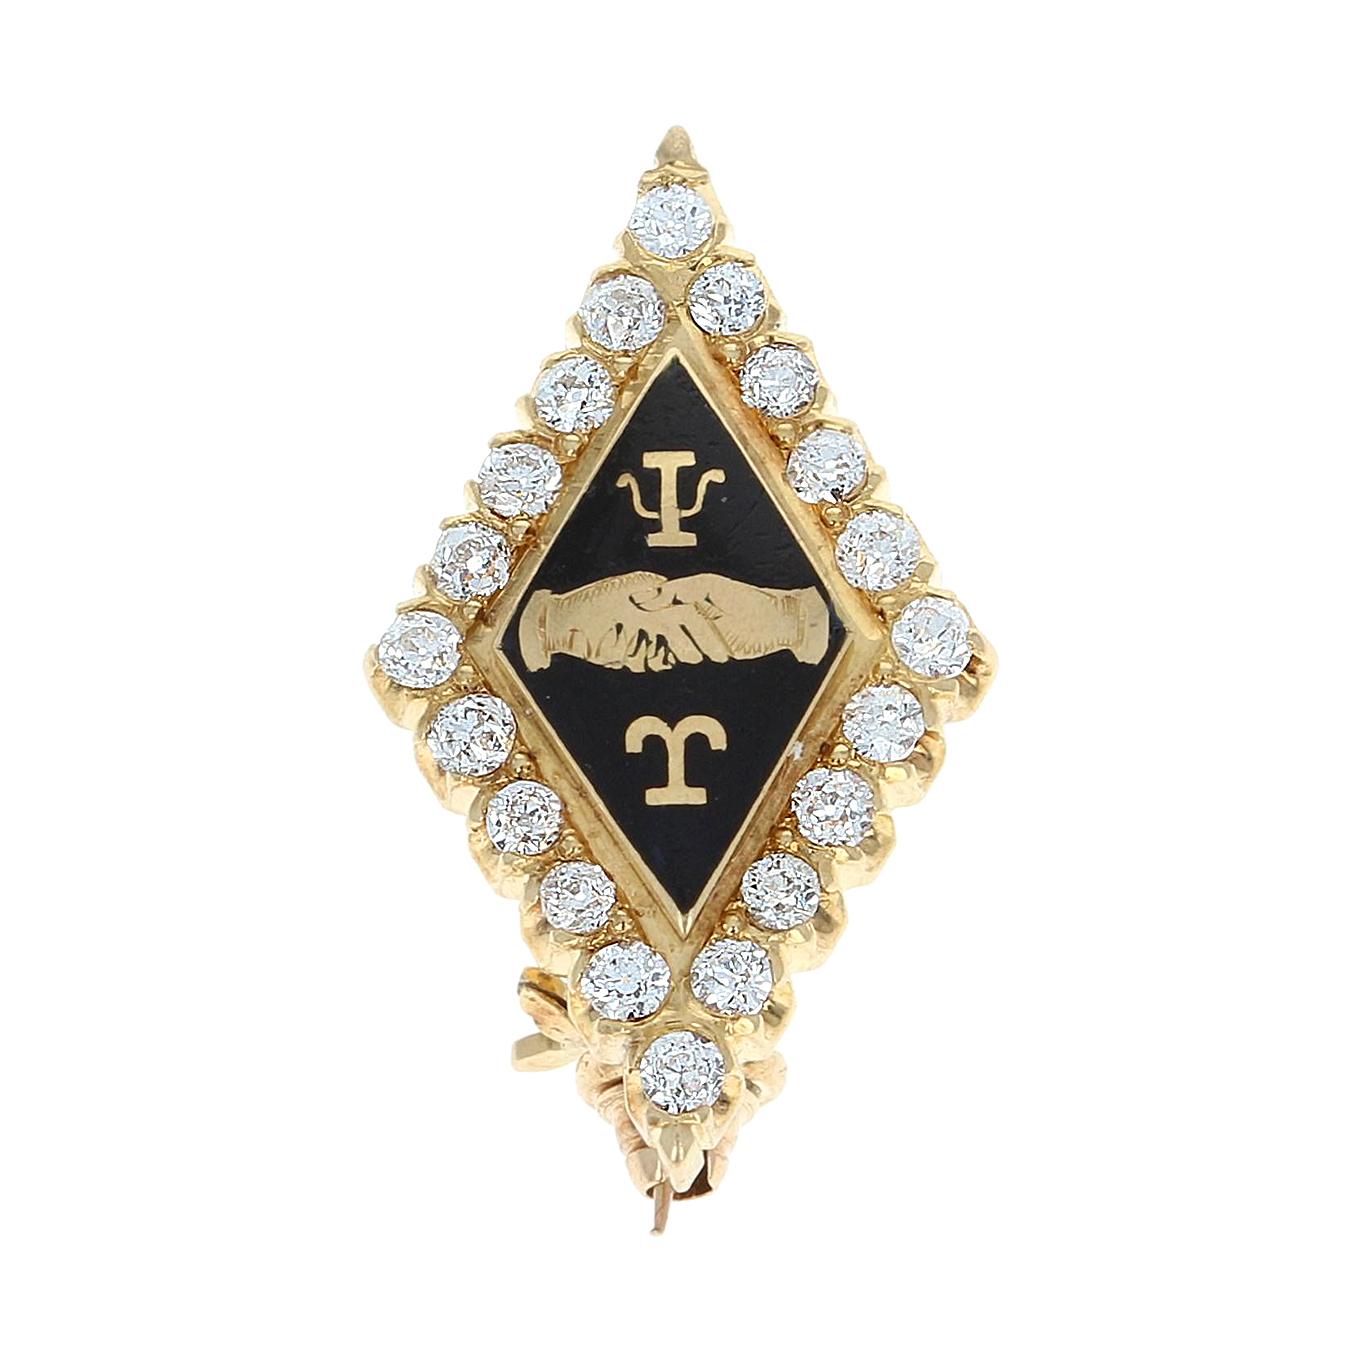 Psi Upsilon Badge, 14 Karat Gold Diamonds 1898 Dartmouth Fraternity Antique Pin